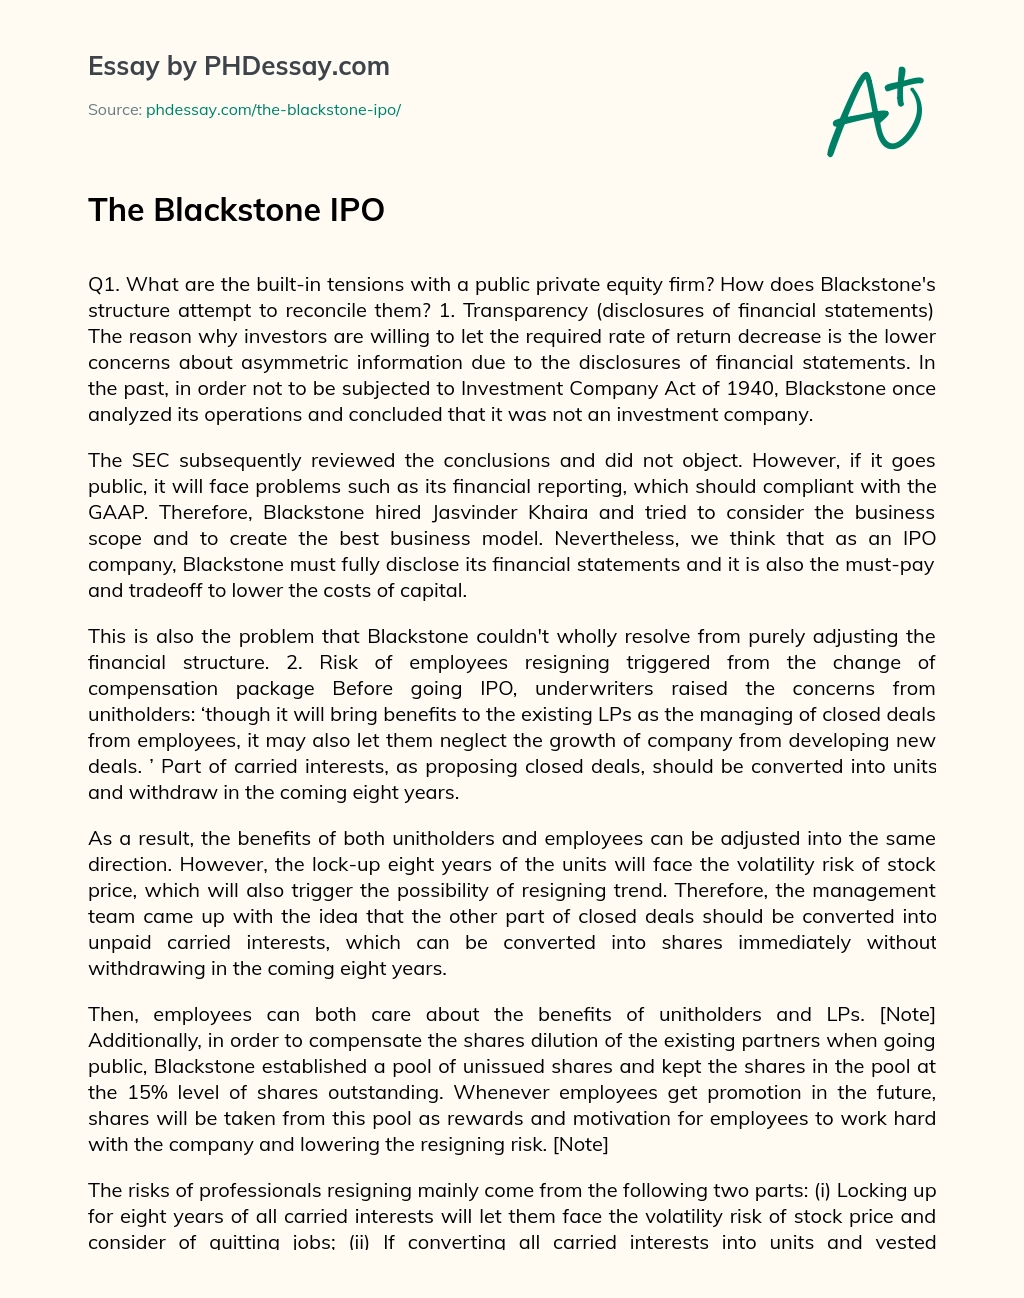 The Blackstone IPO essay